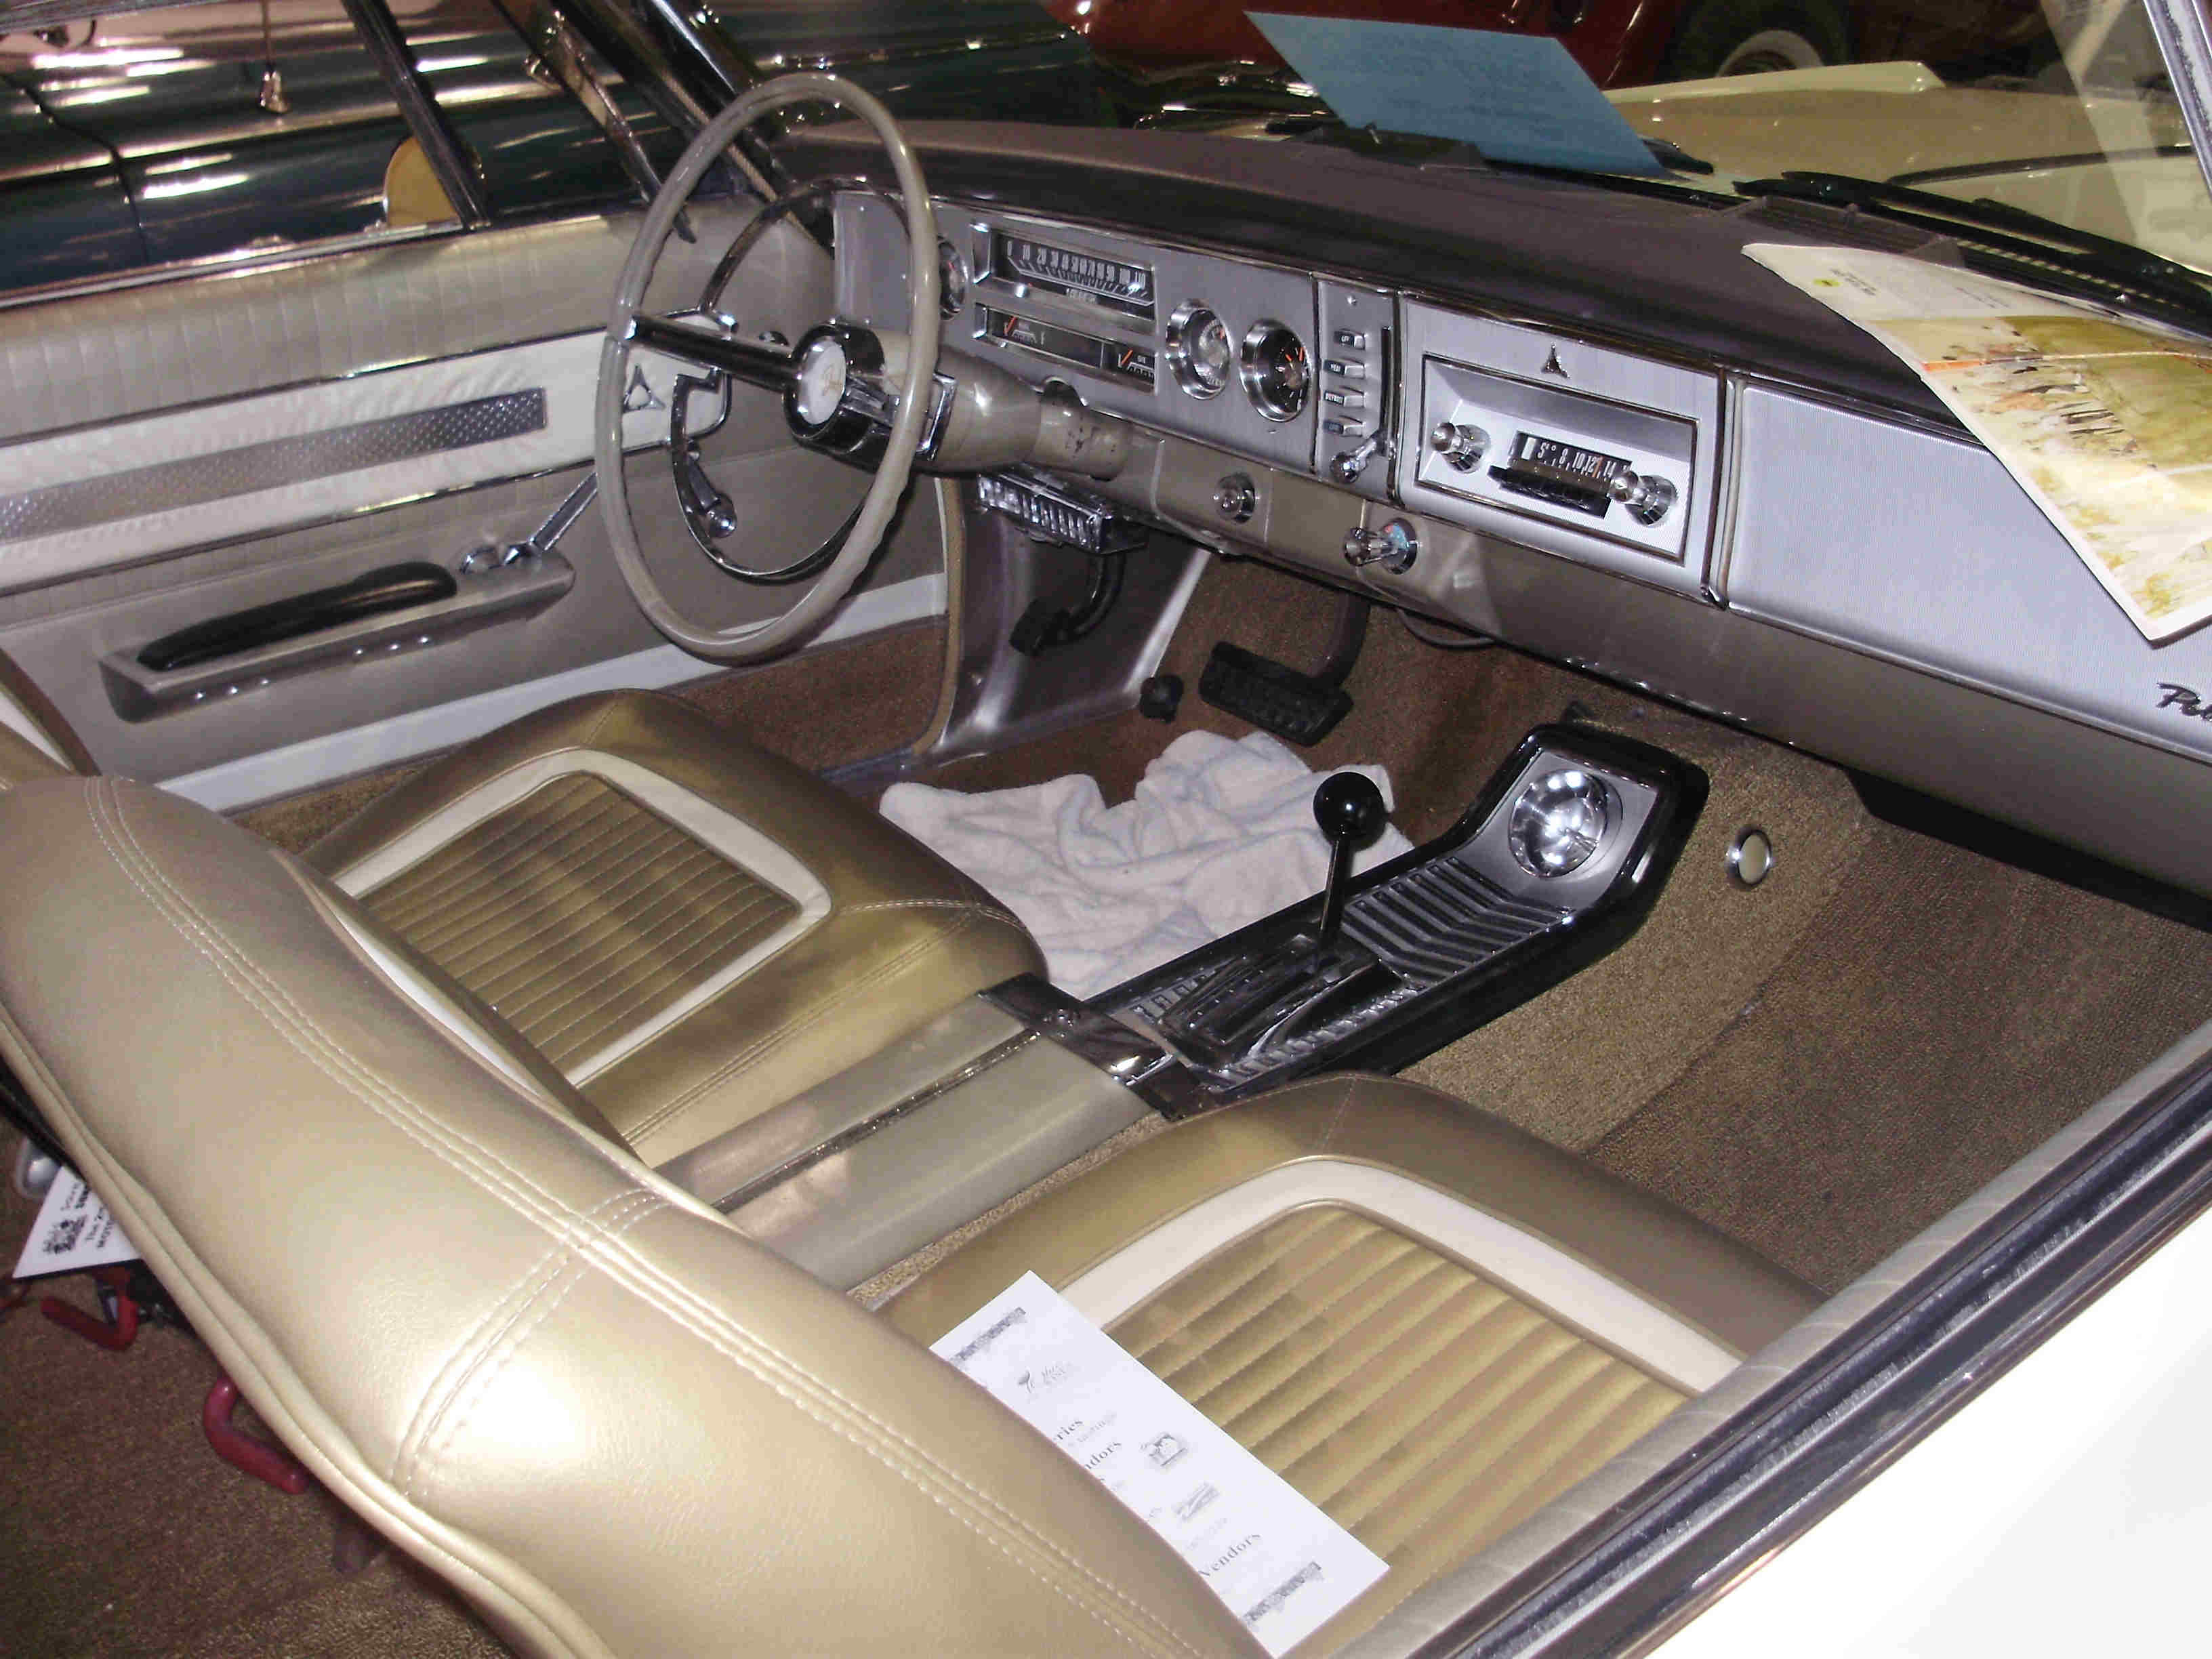 Ralph Walchek's 1965 Dodge Coronet 500